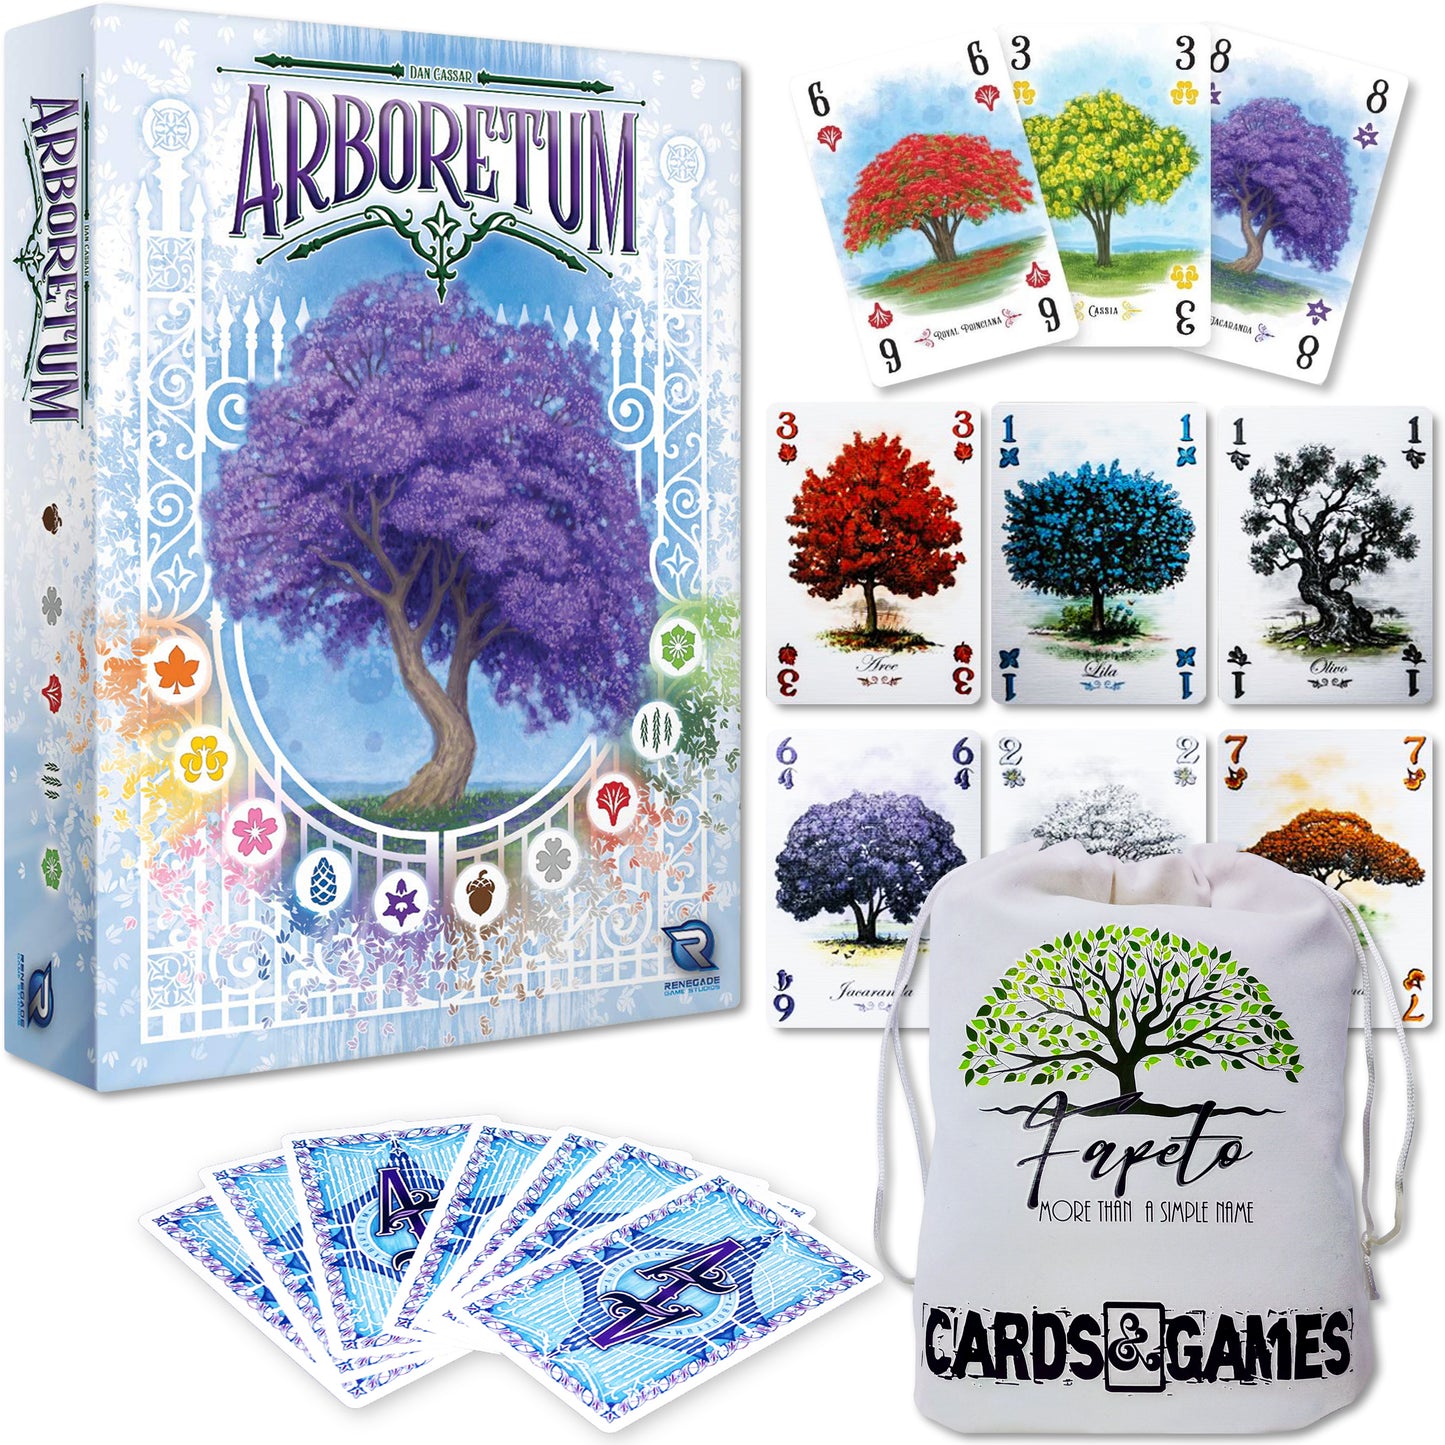 Arboretum - Botanic Garden of Trees Card Game - Full Strategy - Bundle With Random Color Drawstring Bag